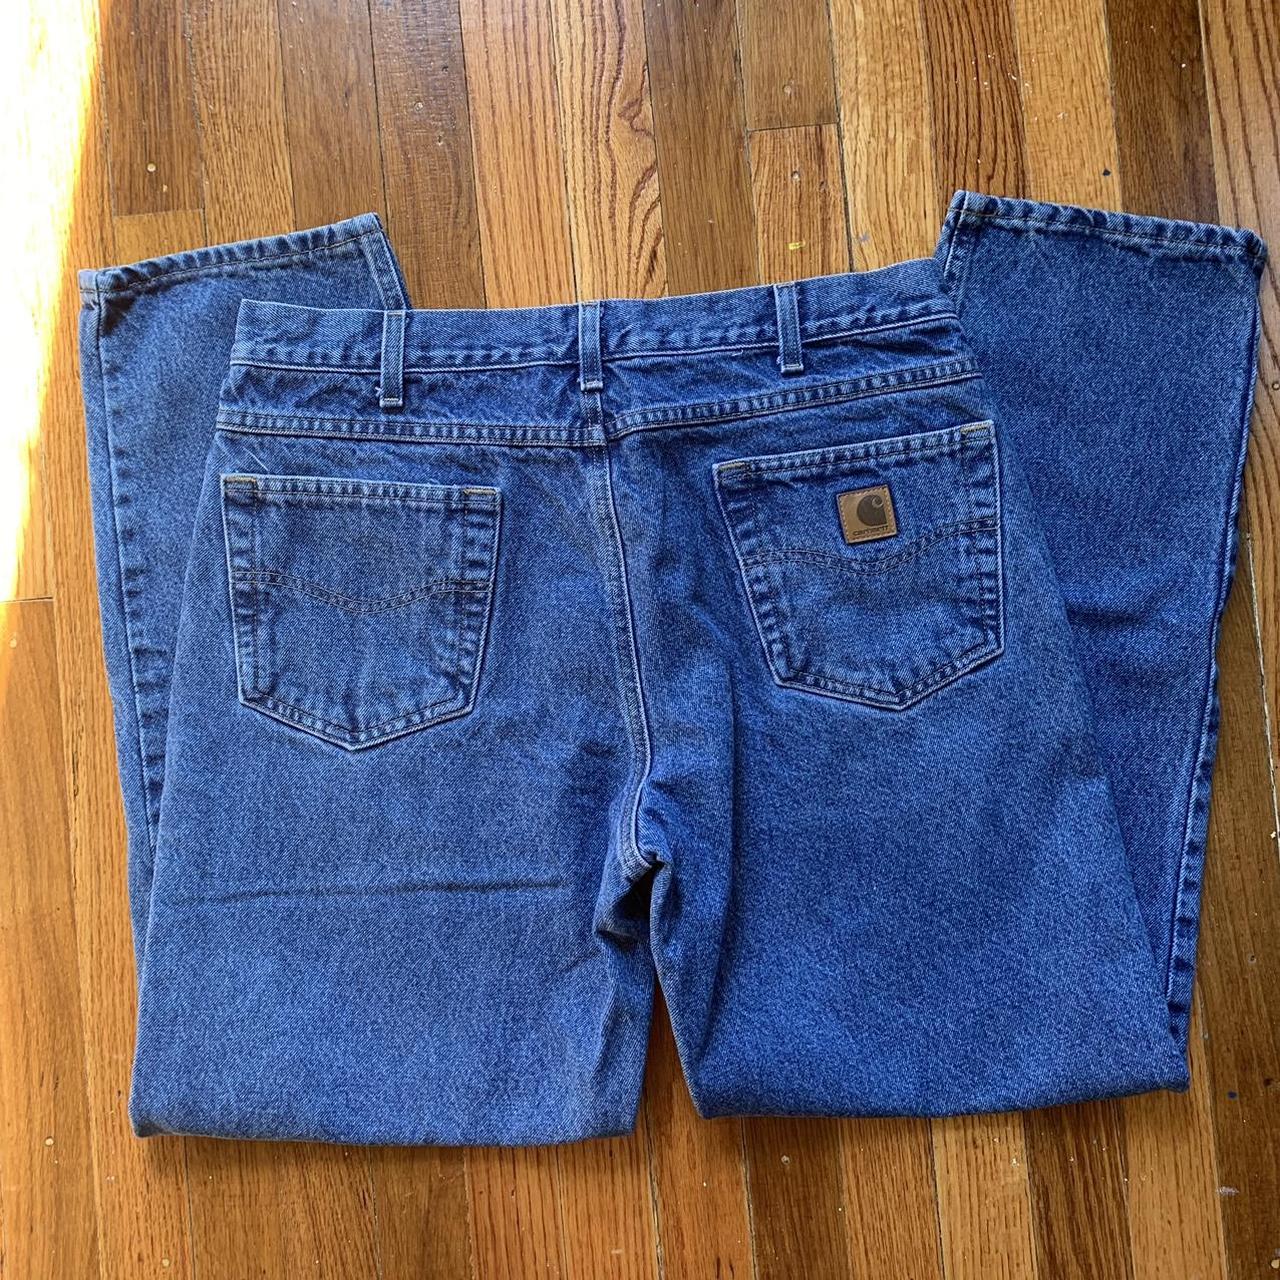 Blue baggy Carhartt skater jeans - measurements as... - Depop